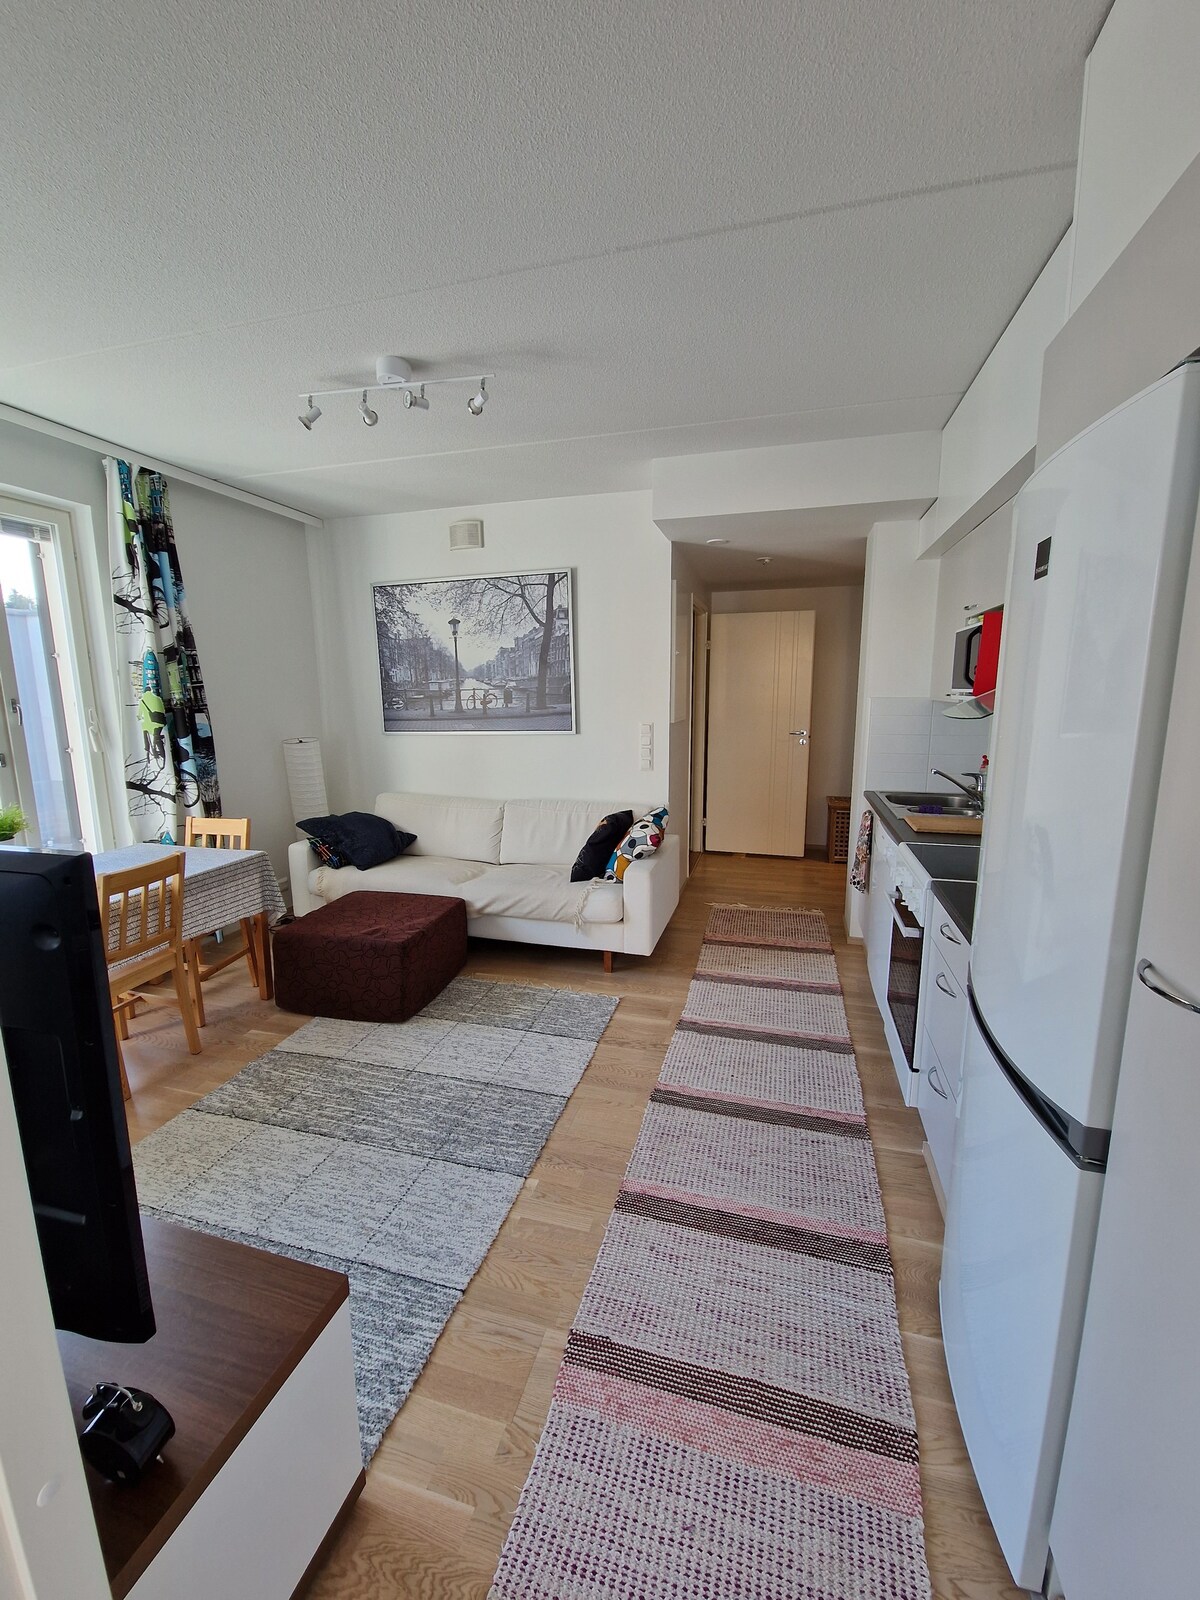 40m2 Scandinavian style new home, Kaleva / Tampere